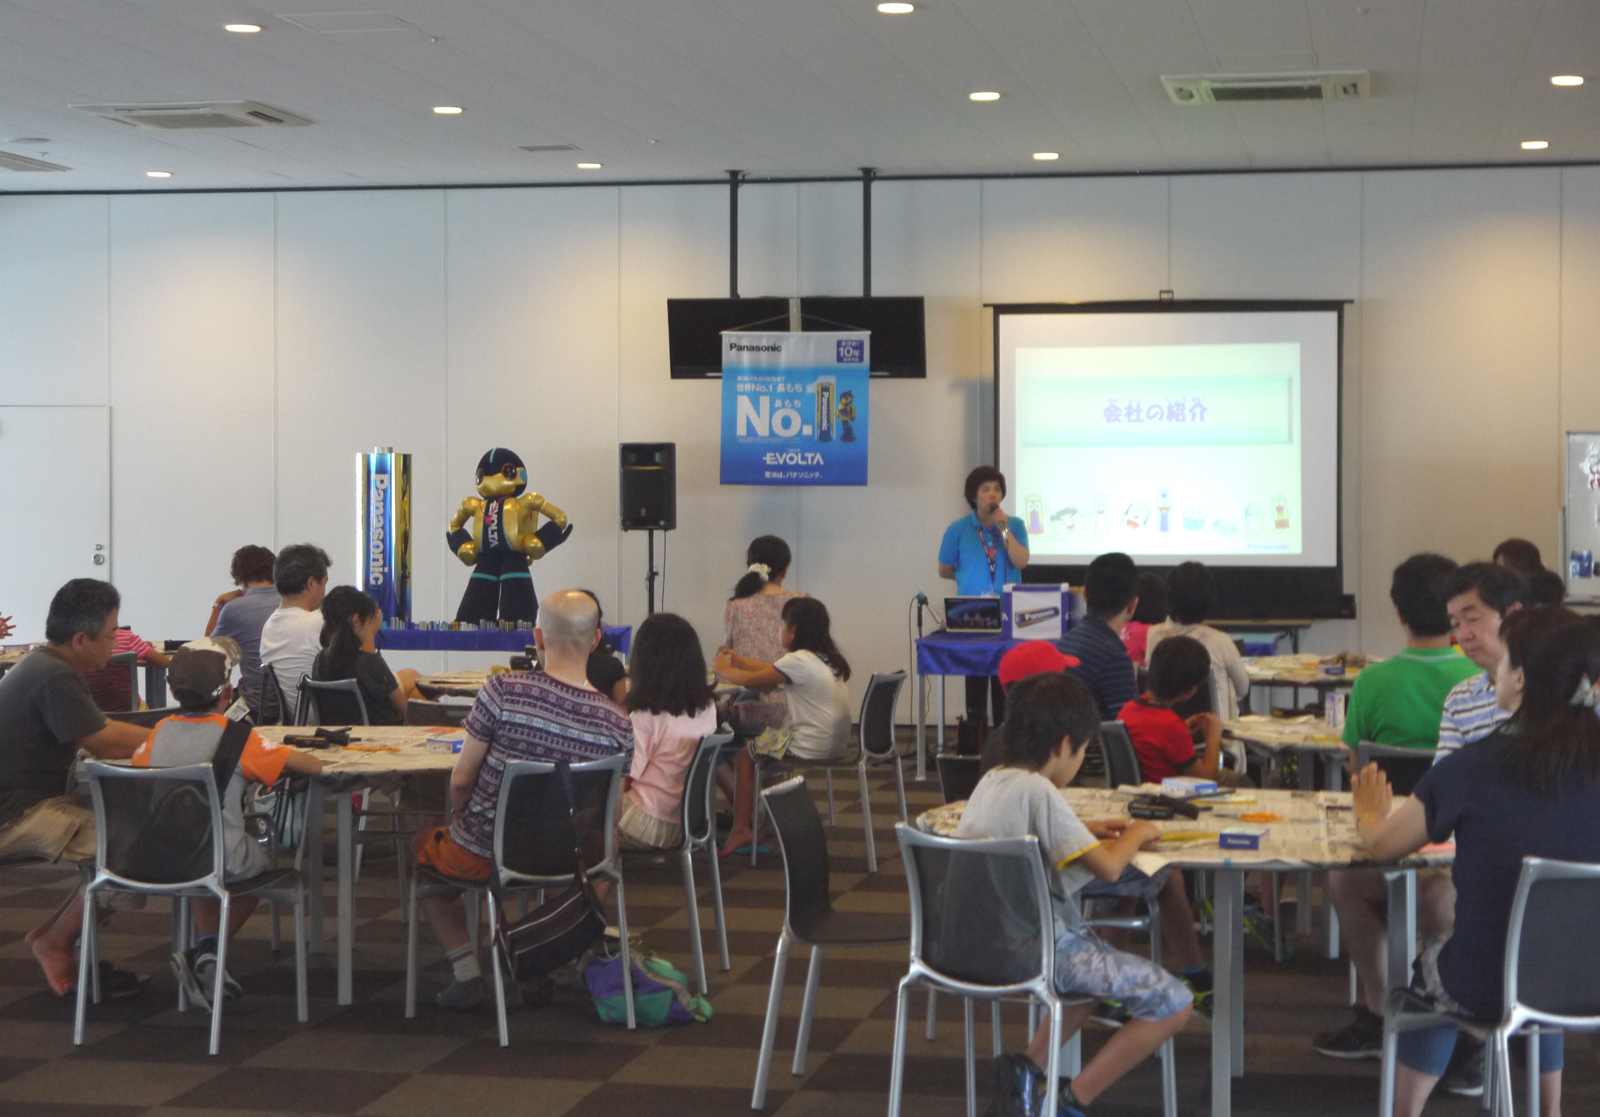 「2014 Ene-1 GP SUZUKA」での「手づくり乾電池教室」の様子